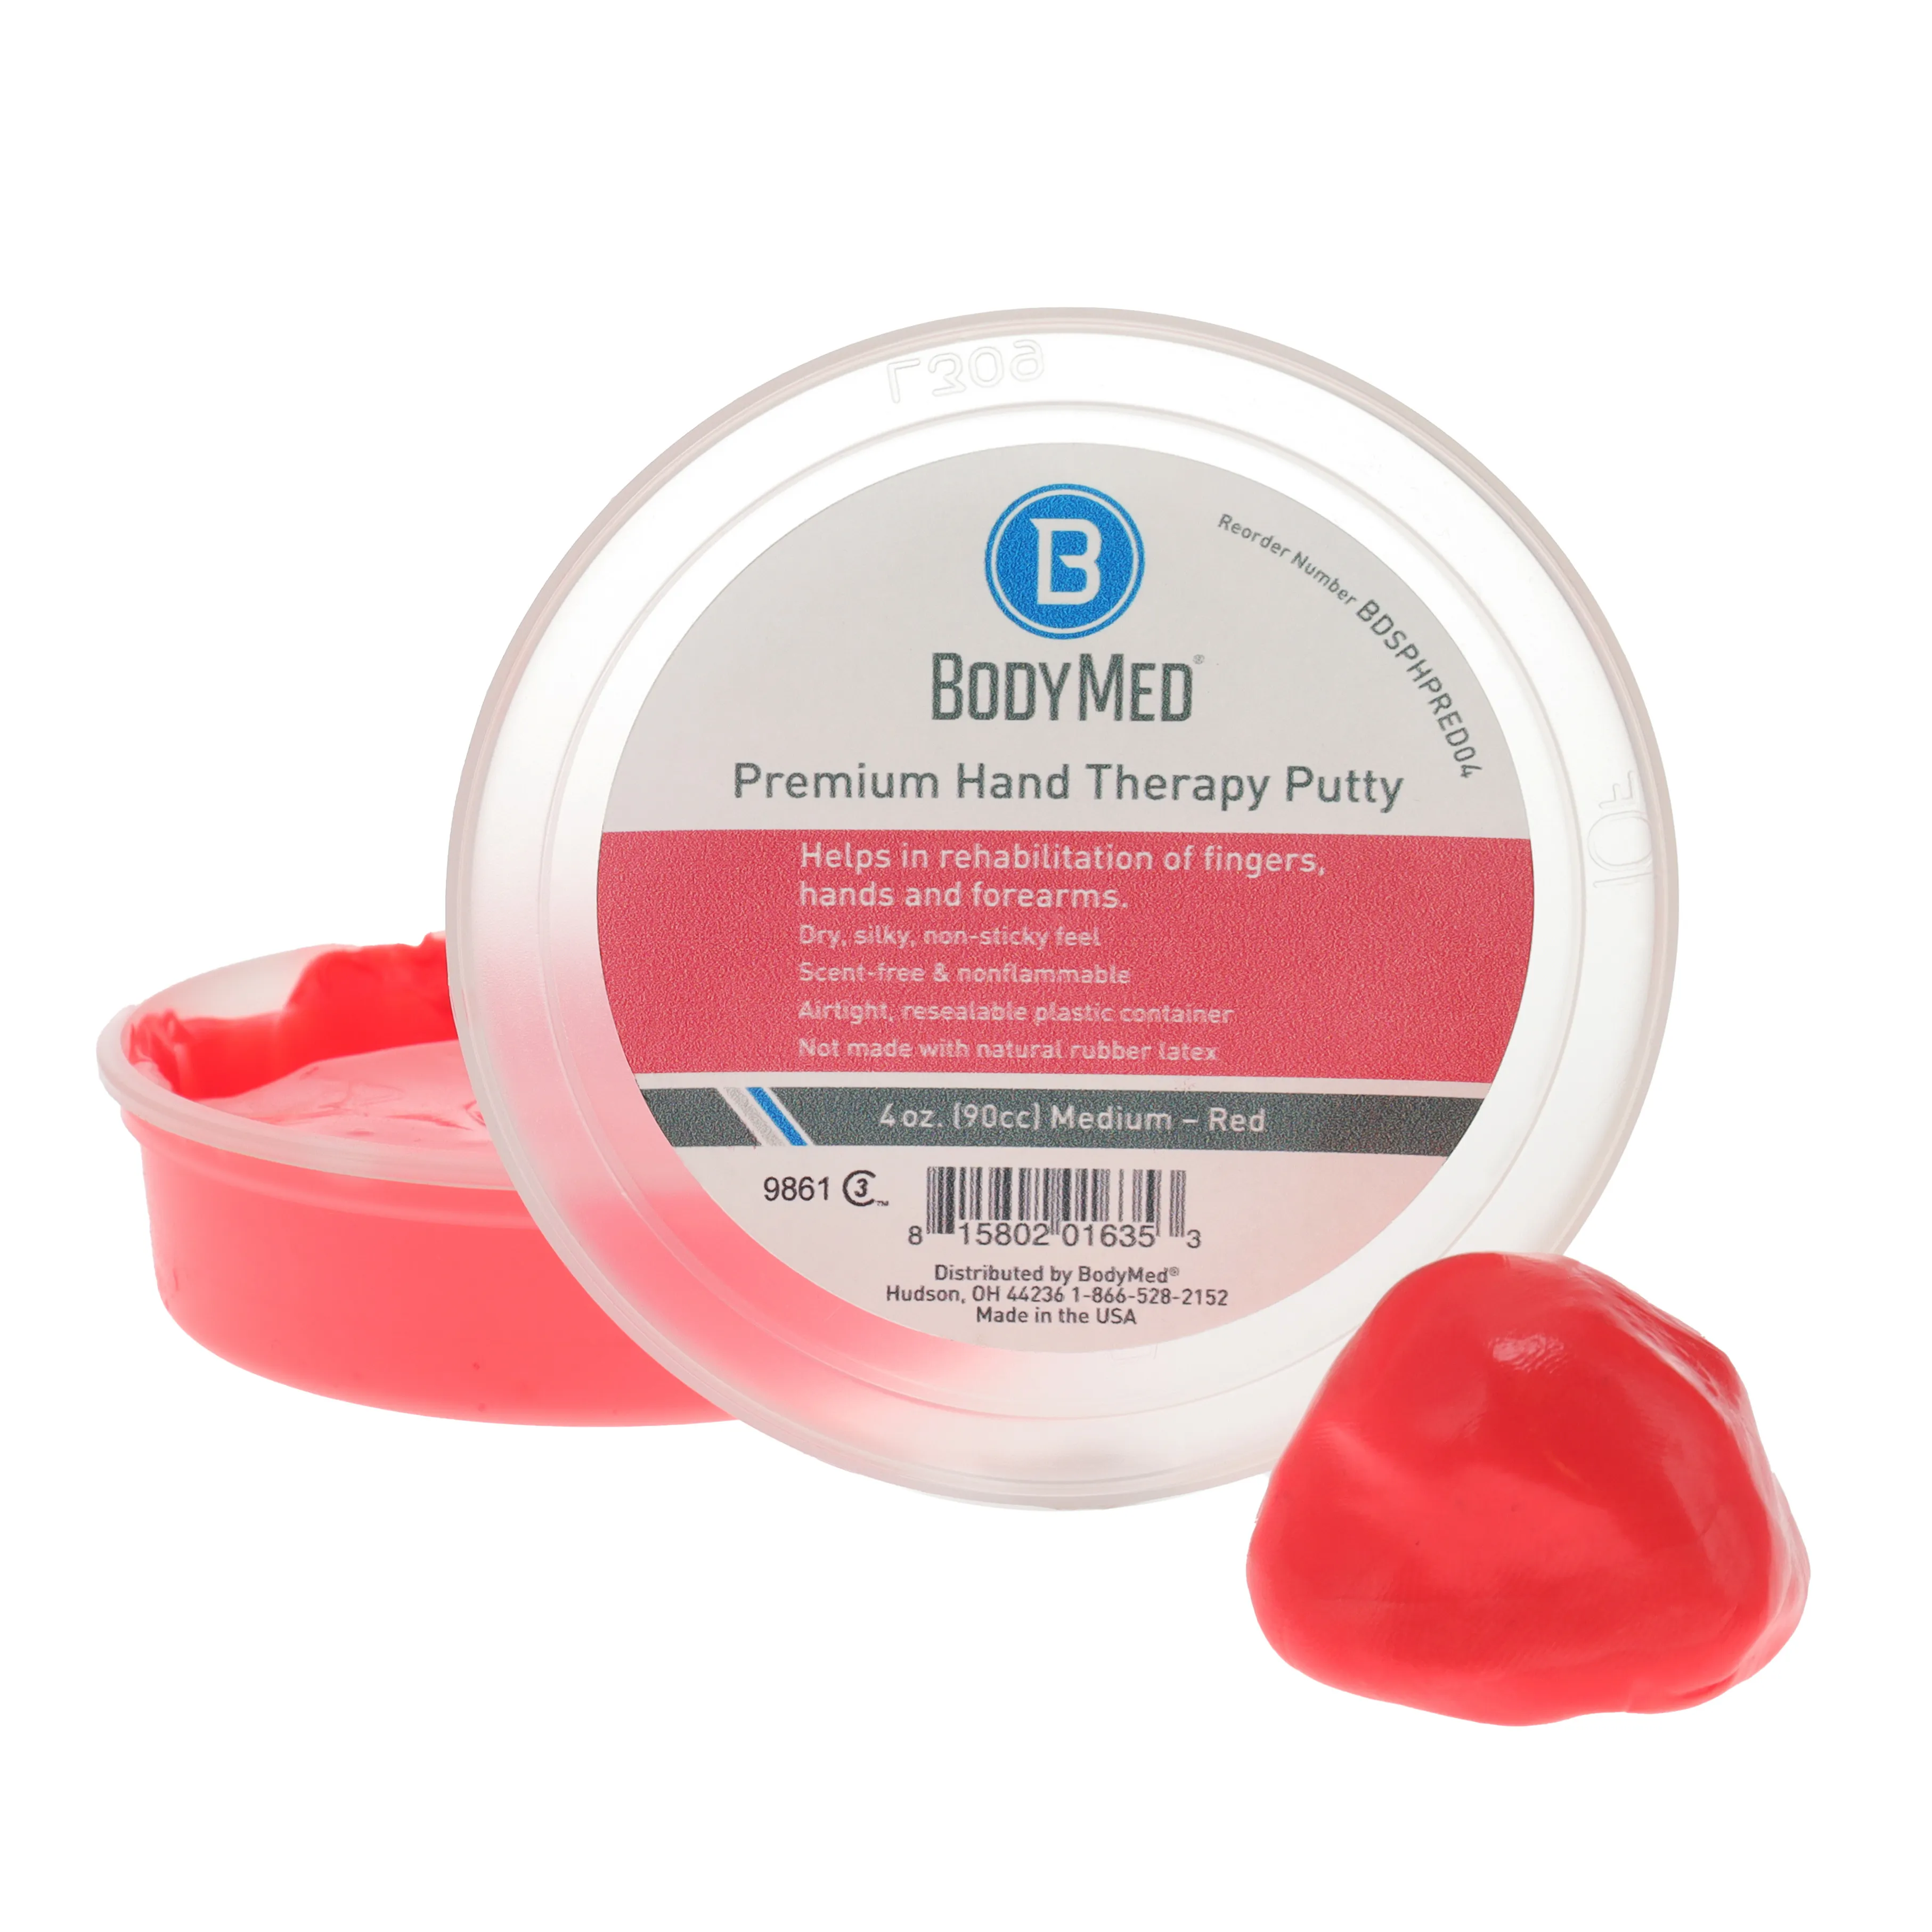 Bodymed - BDSPHPRED04 - Premium Hand Therapy Putty - Medium